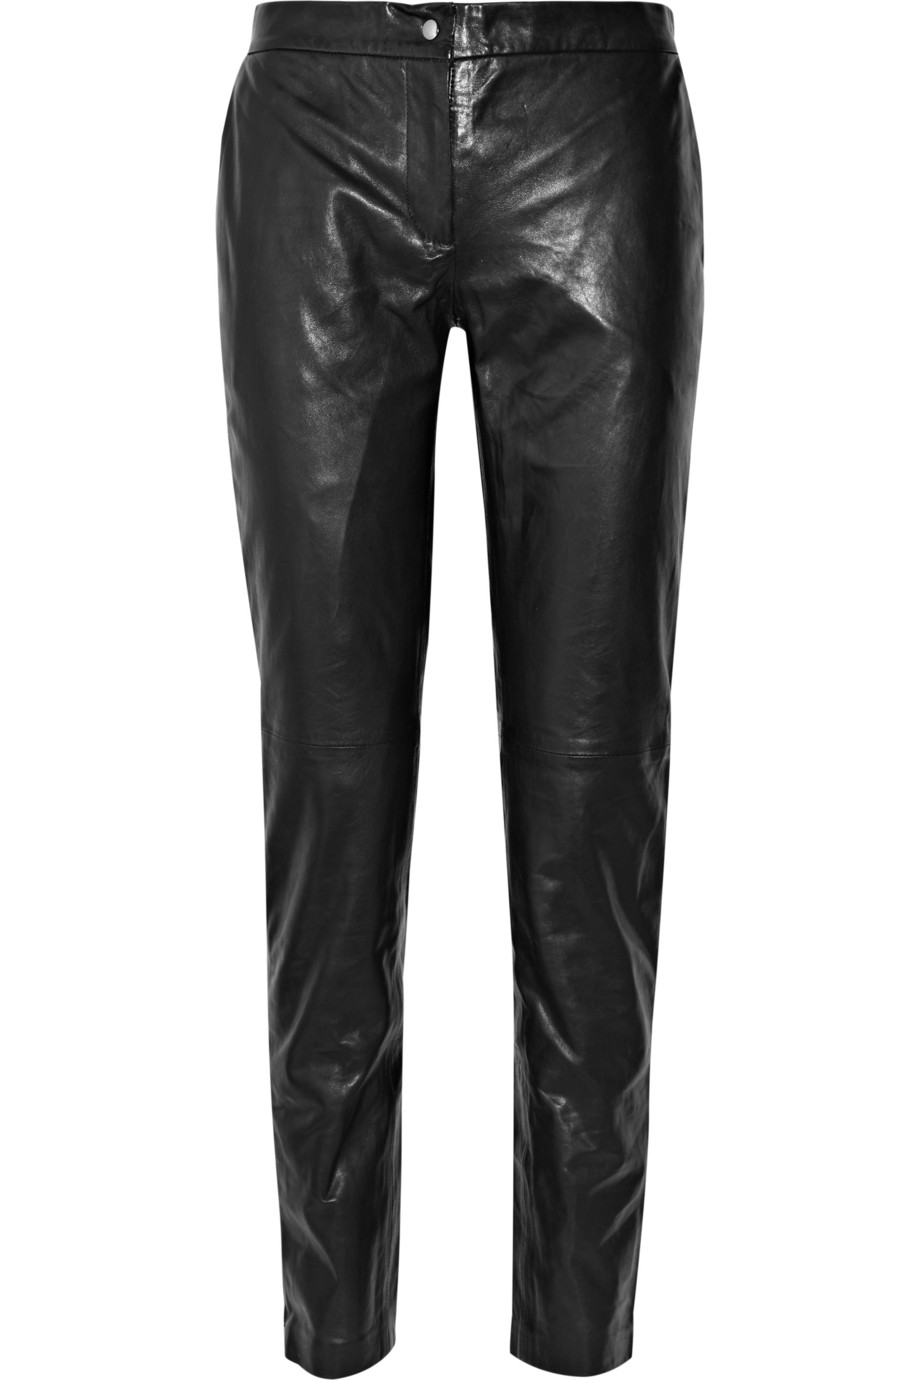 moschino leather pants